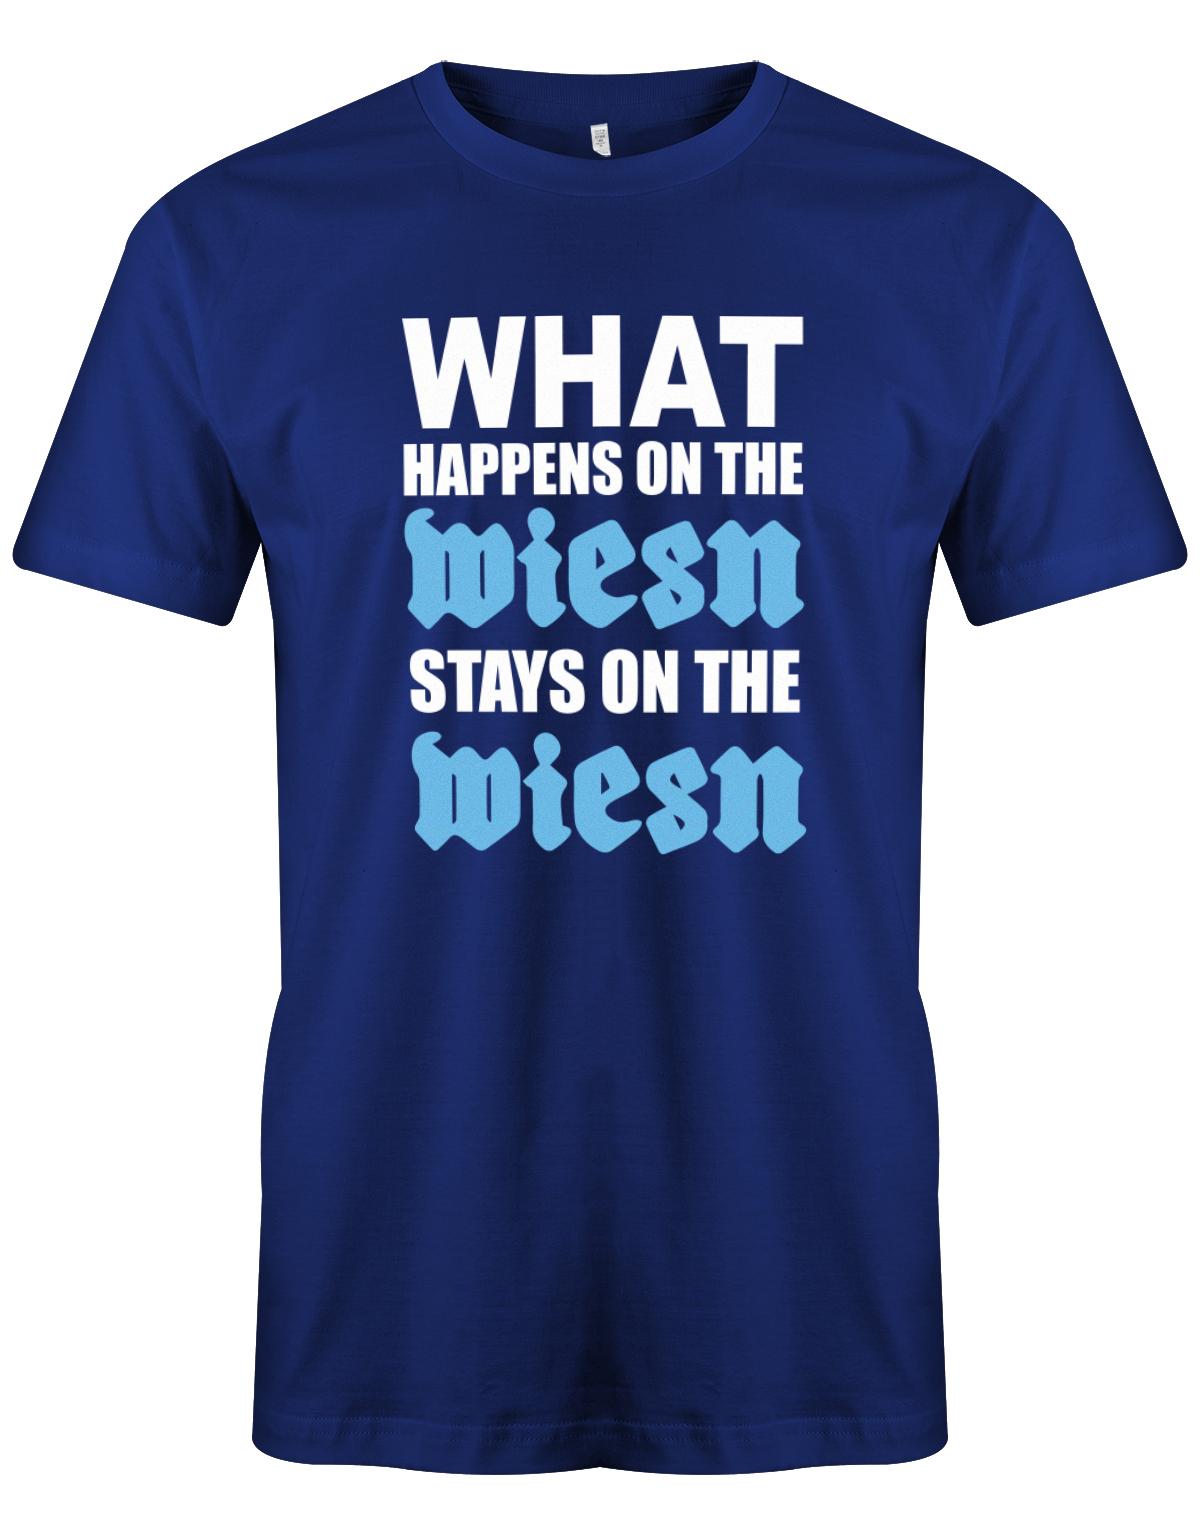 What-happens-on-the-wiesn-stay-on-the-wiesn-herren-shirt-royalblau